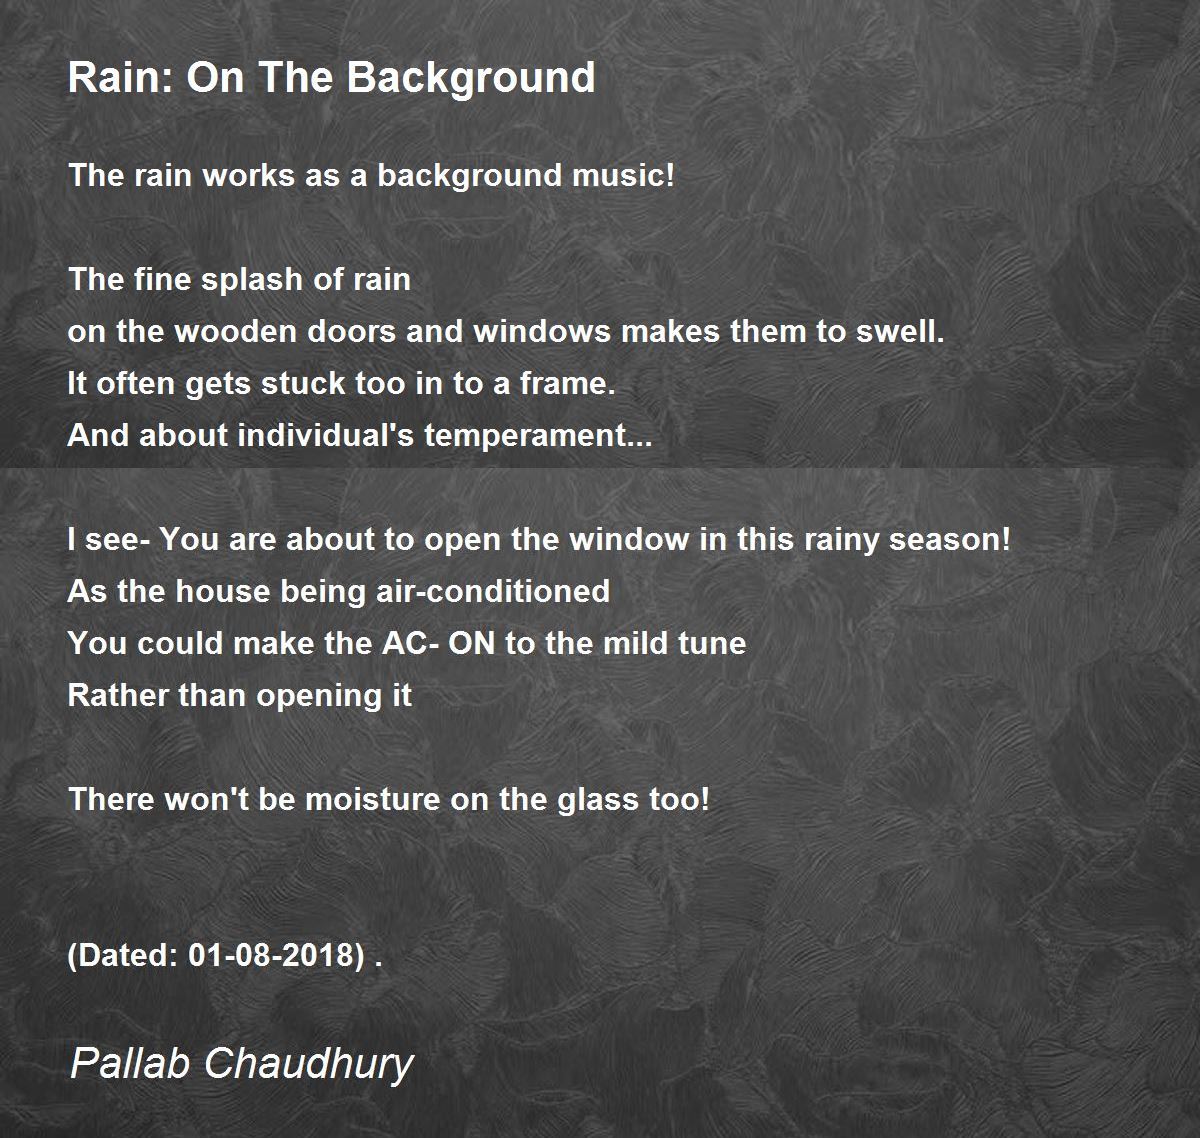 Rain: On The Background - Rain: On The Background Poem by Pallab Chaudhury